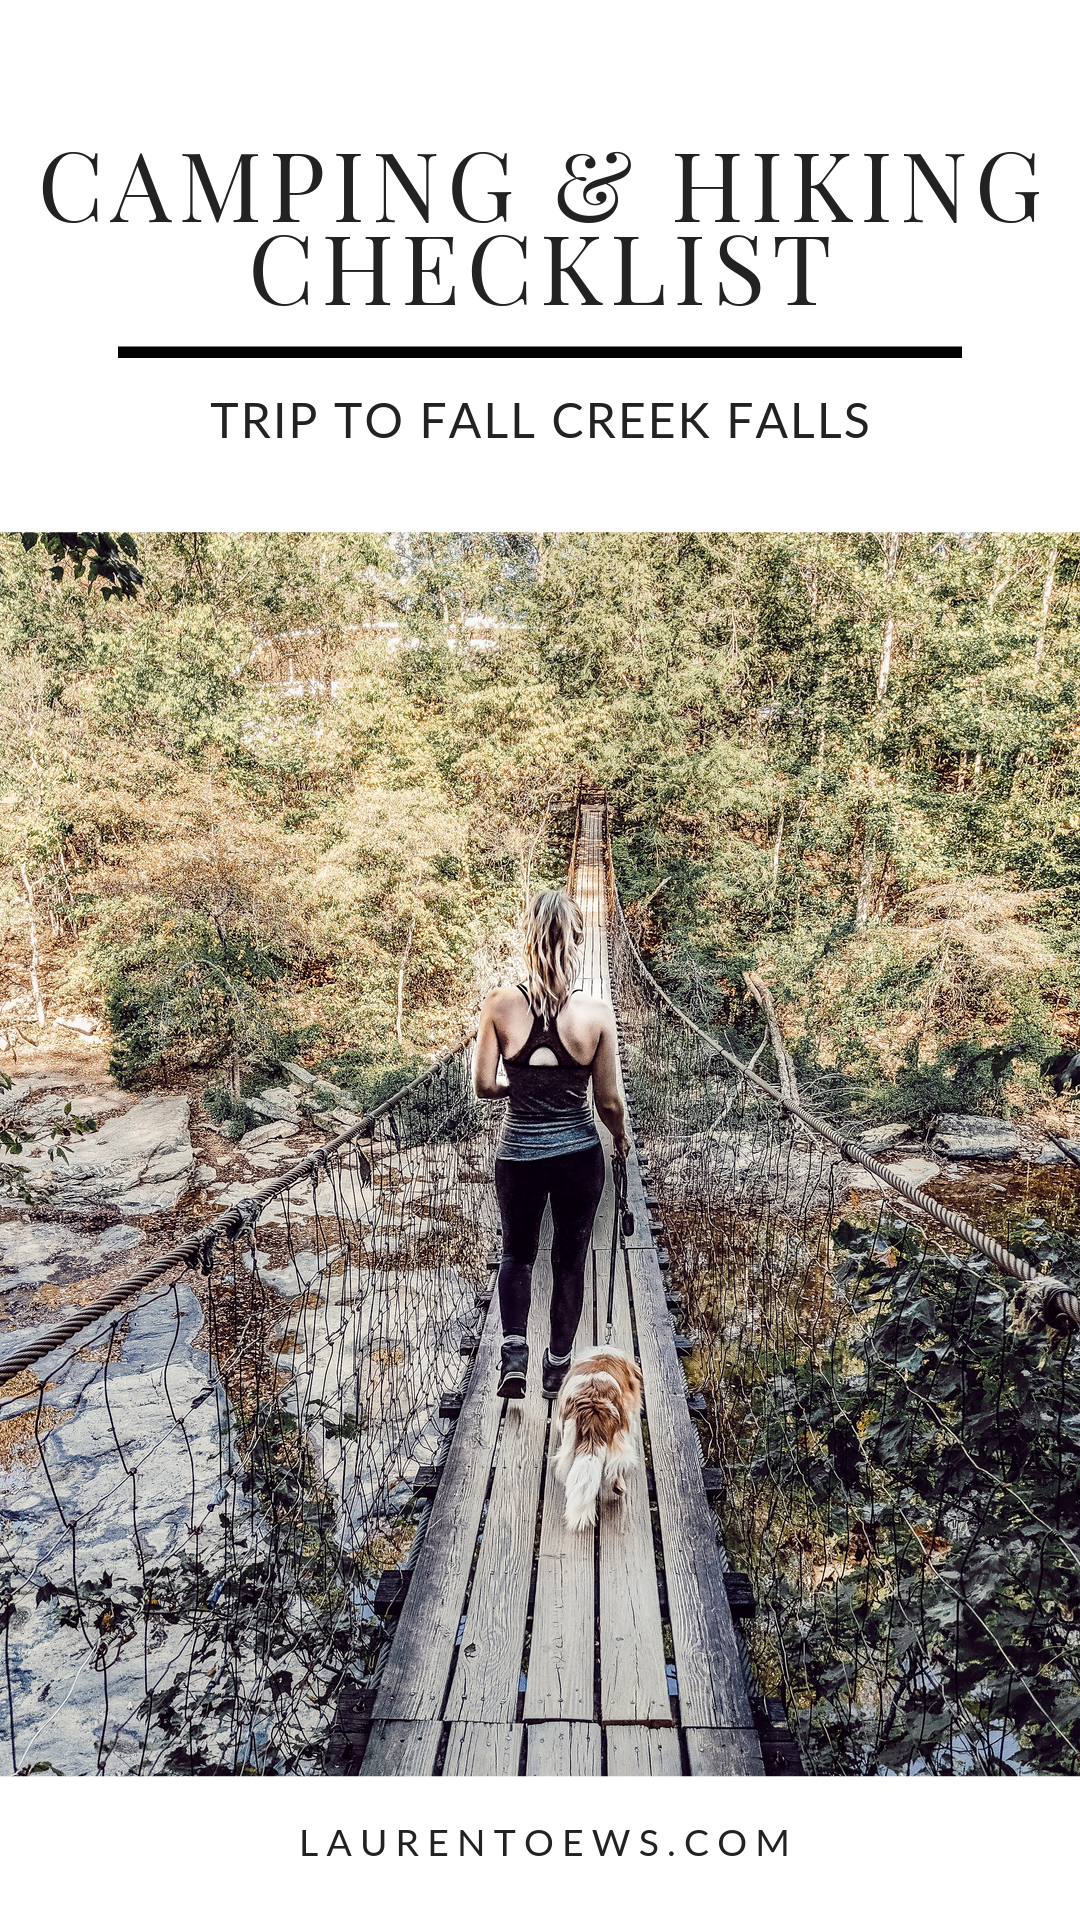 Camping & hiking checklist - Fall Creek Falls